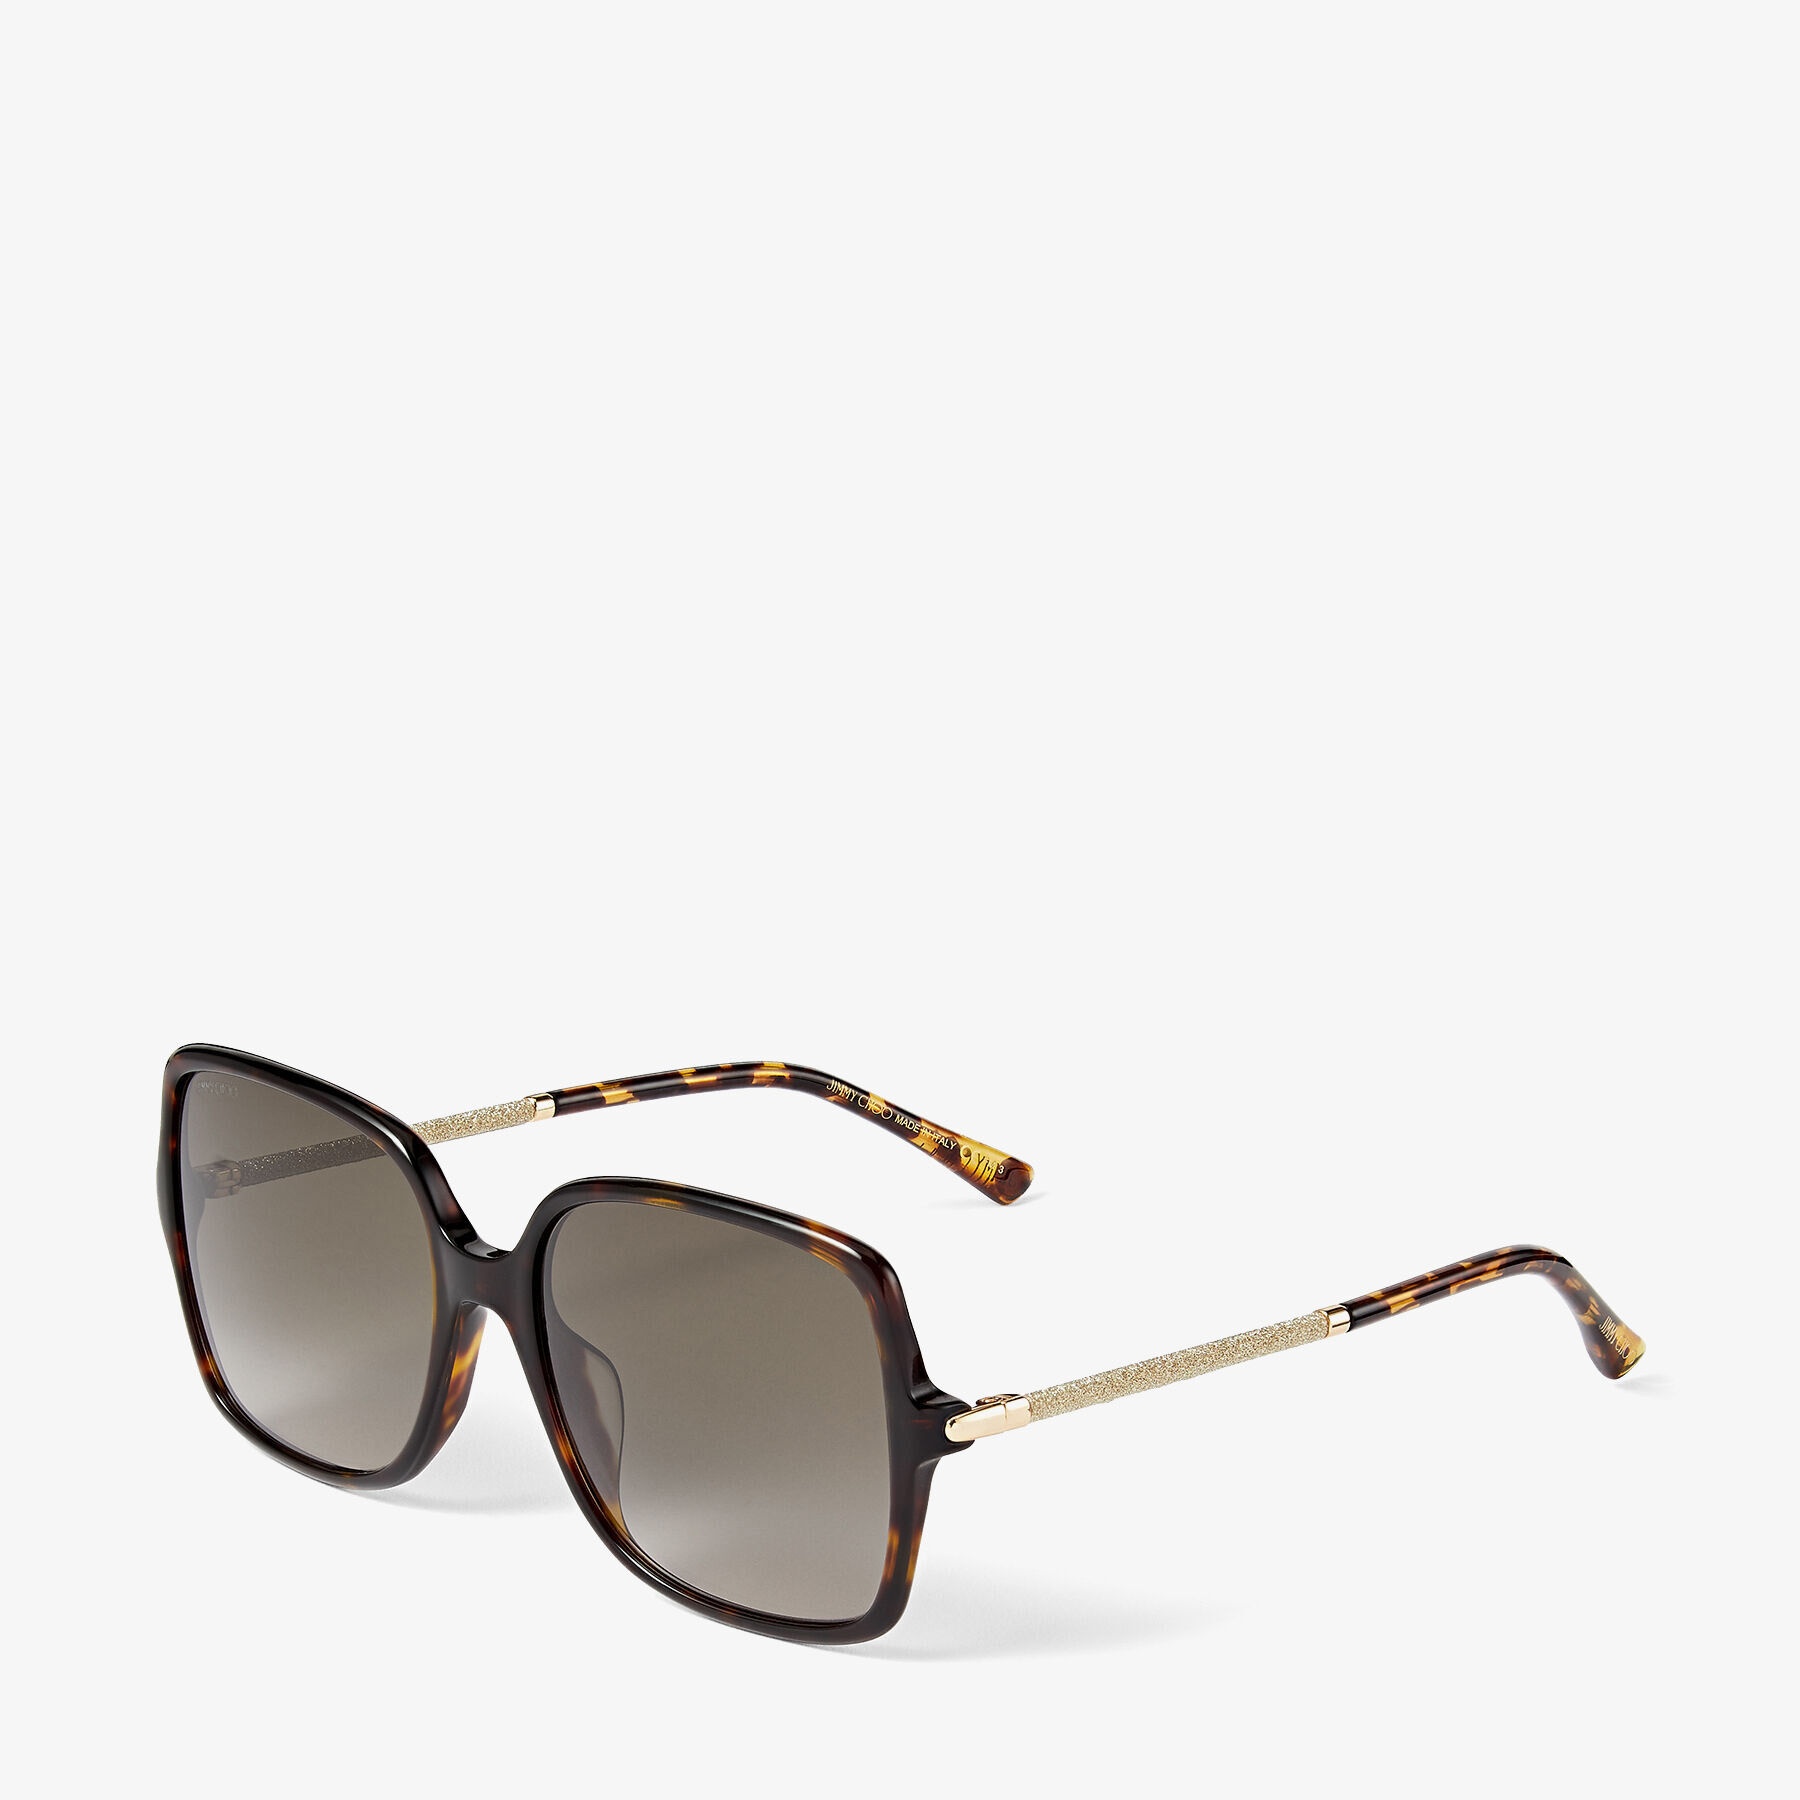 Eppie
Dark Havana Square-Frame Sunglasses with Gold Glitter - 3